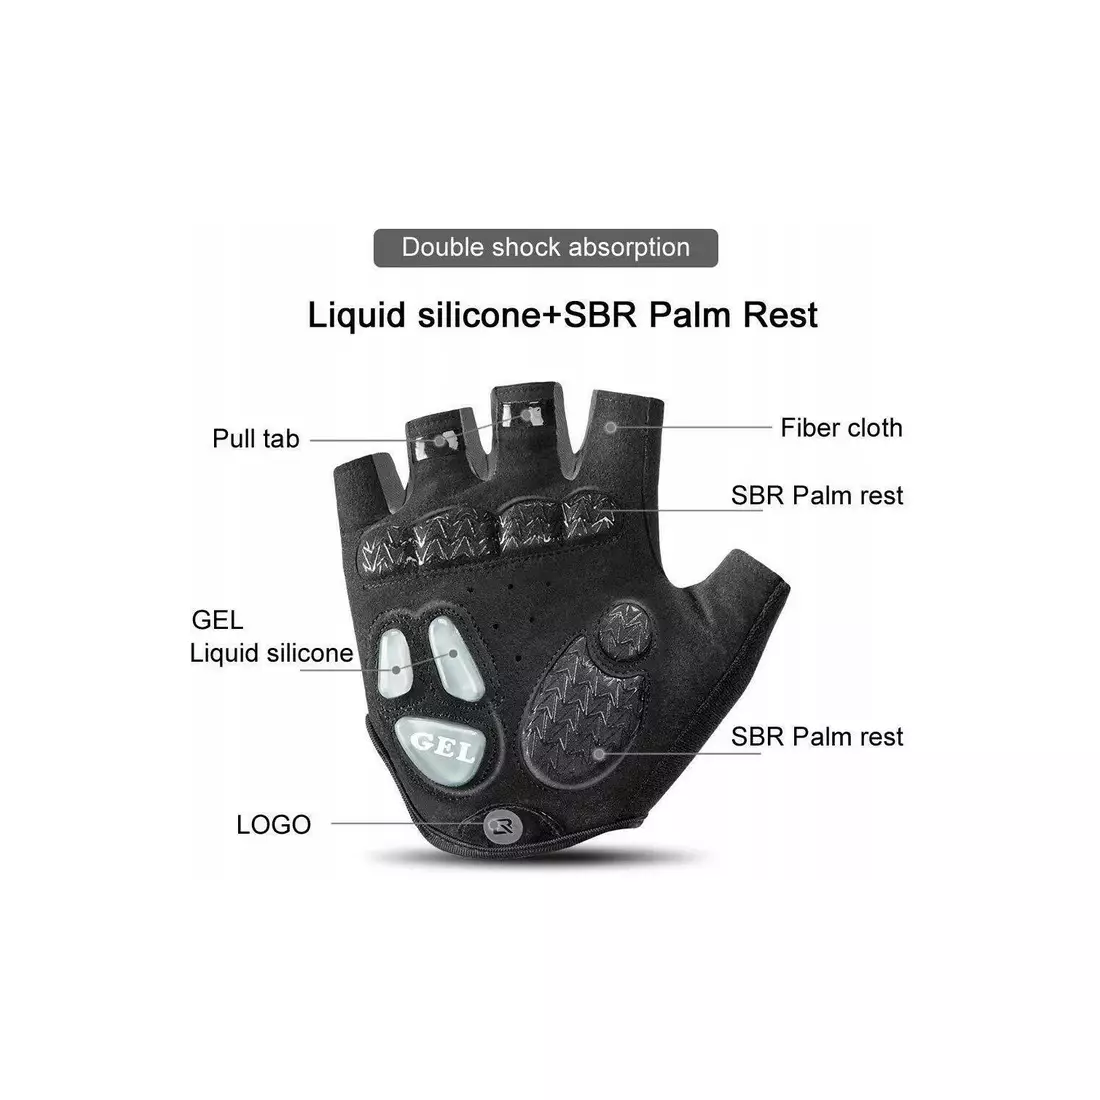 Rockbros cycling gloves short finger, black-grey S169BGR